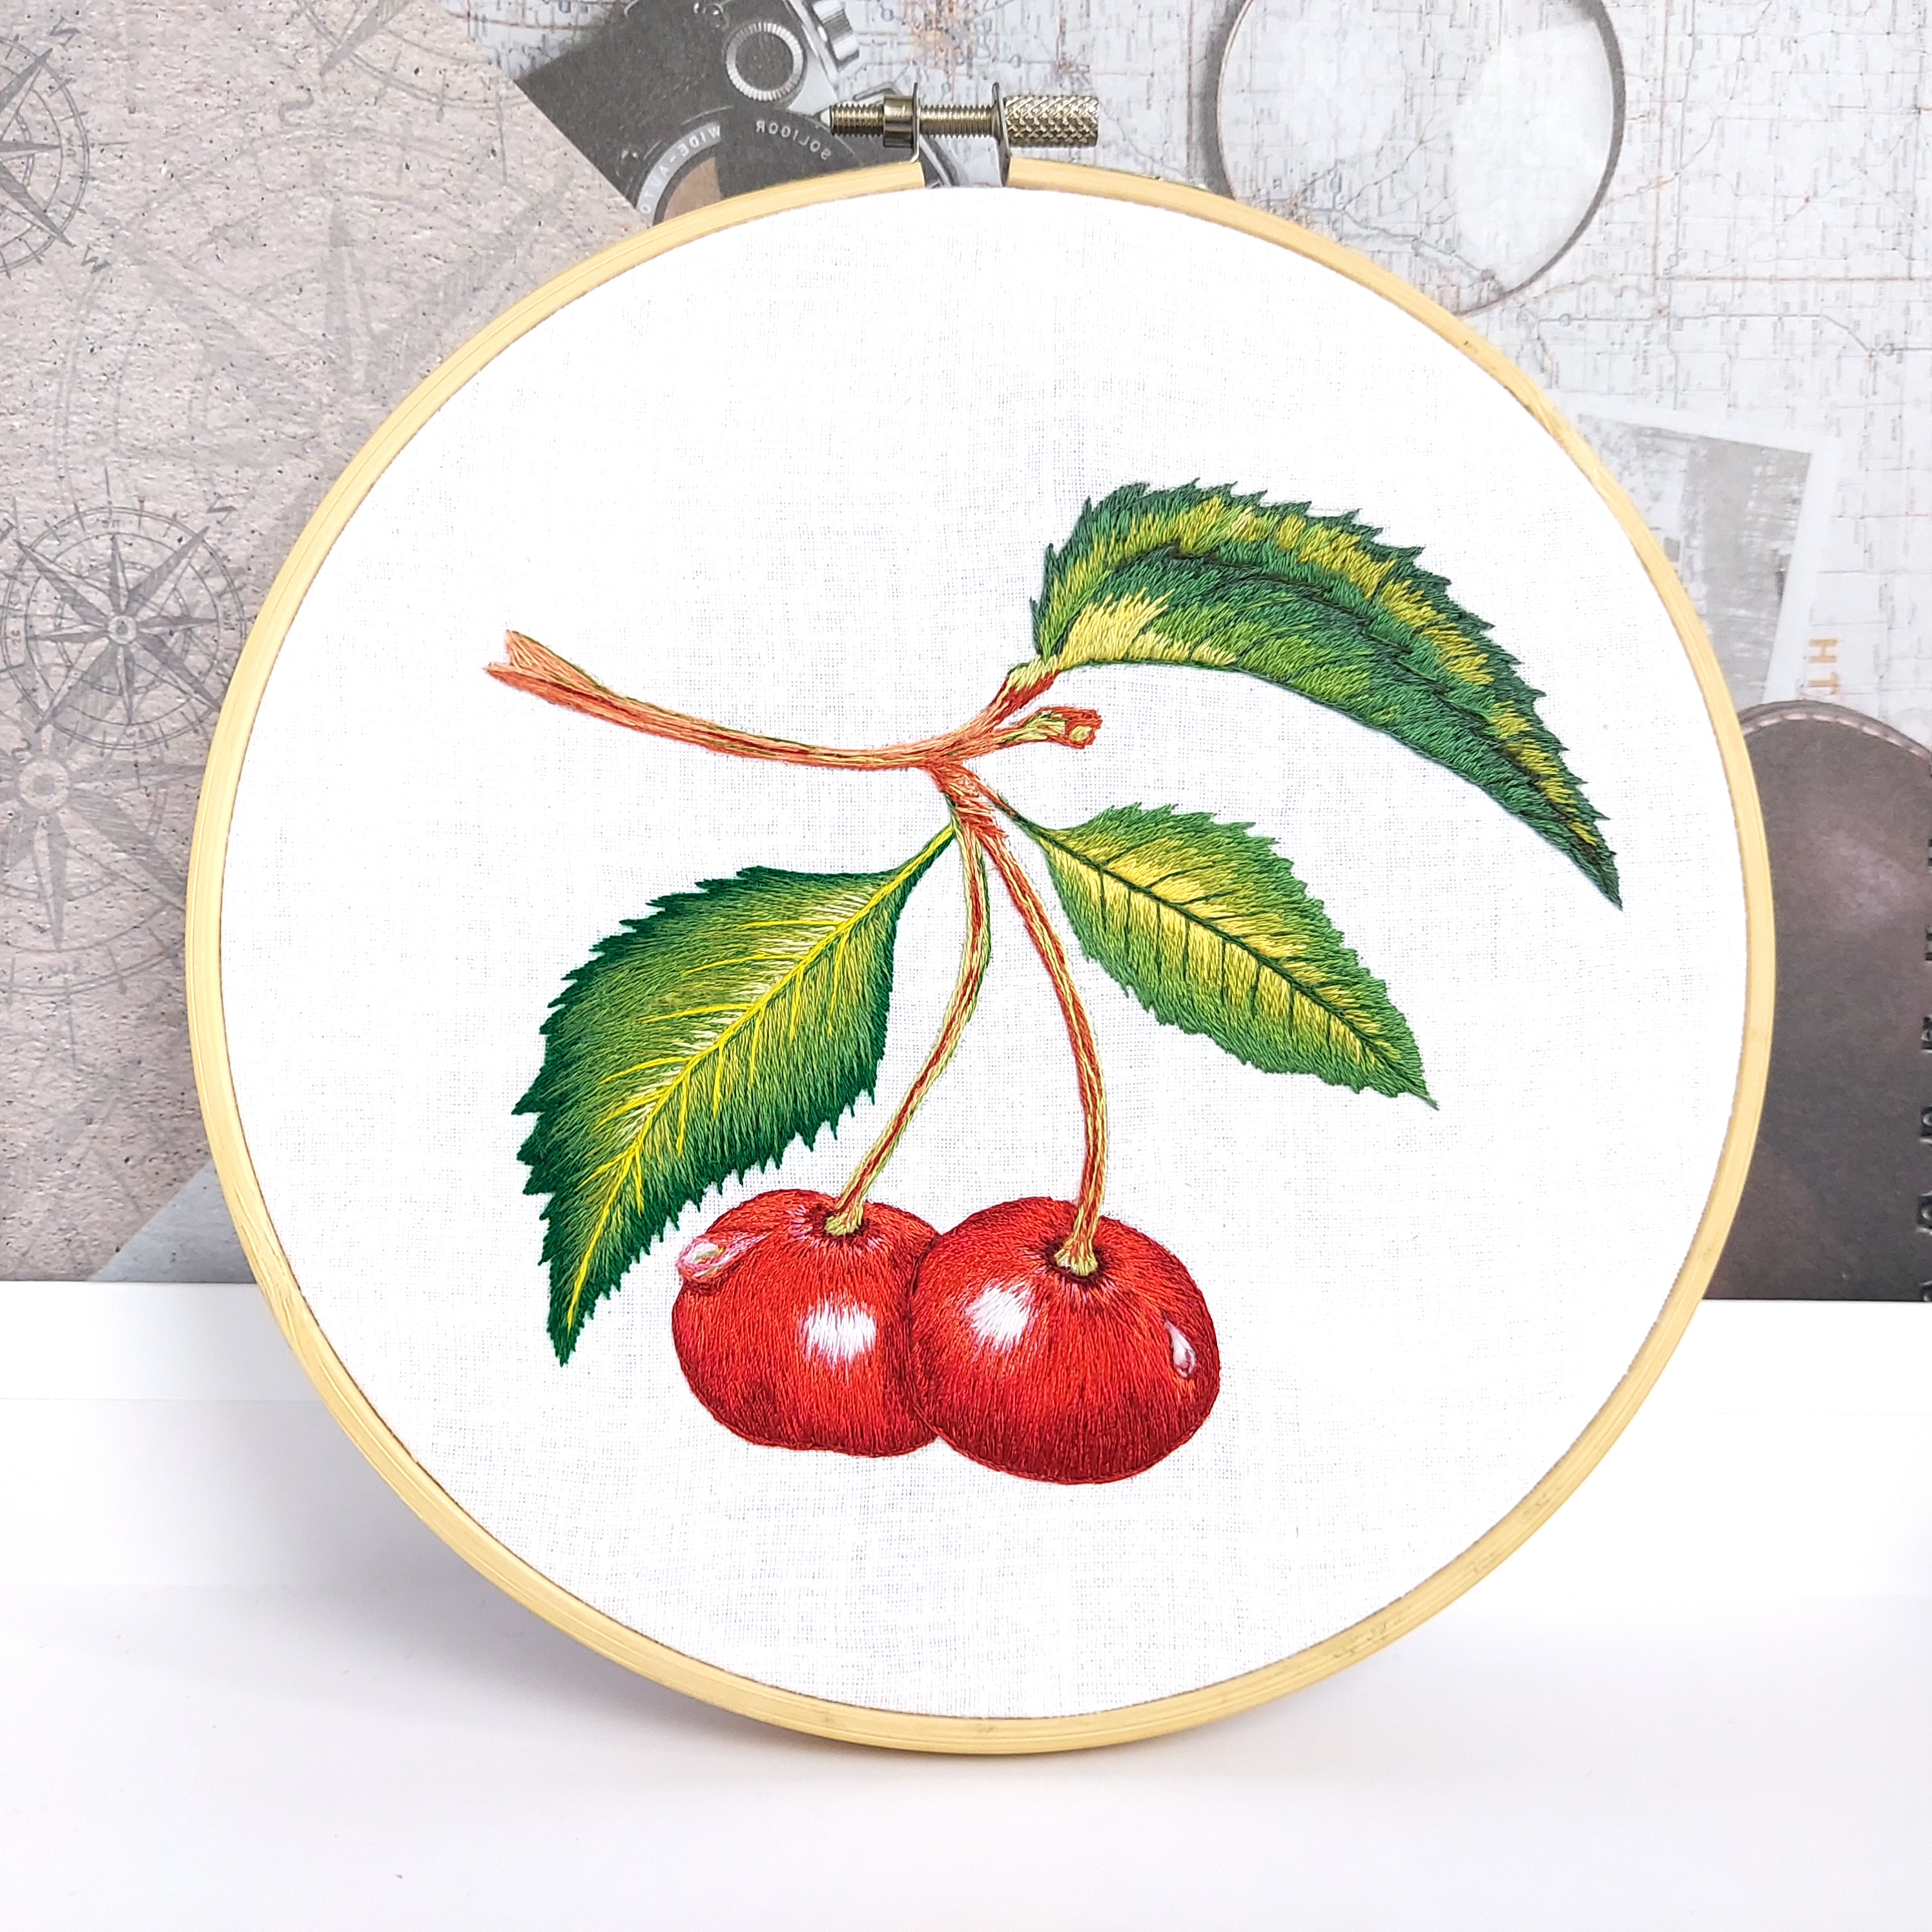 Embroidery Hoop - Cherry - Artwork - Home Decor